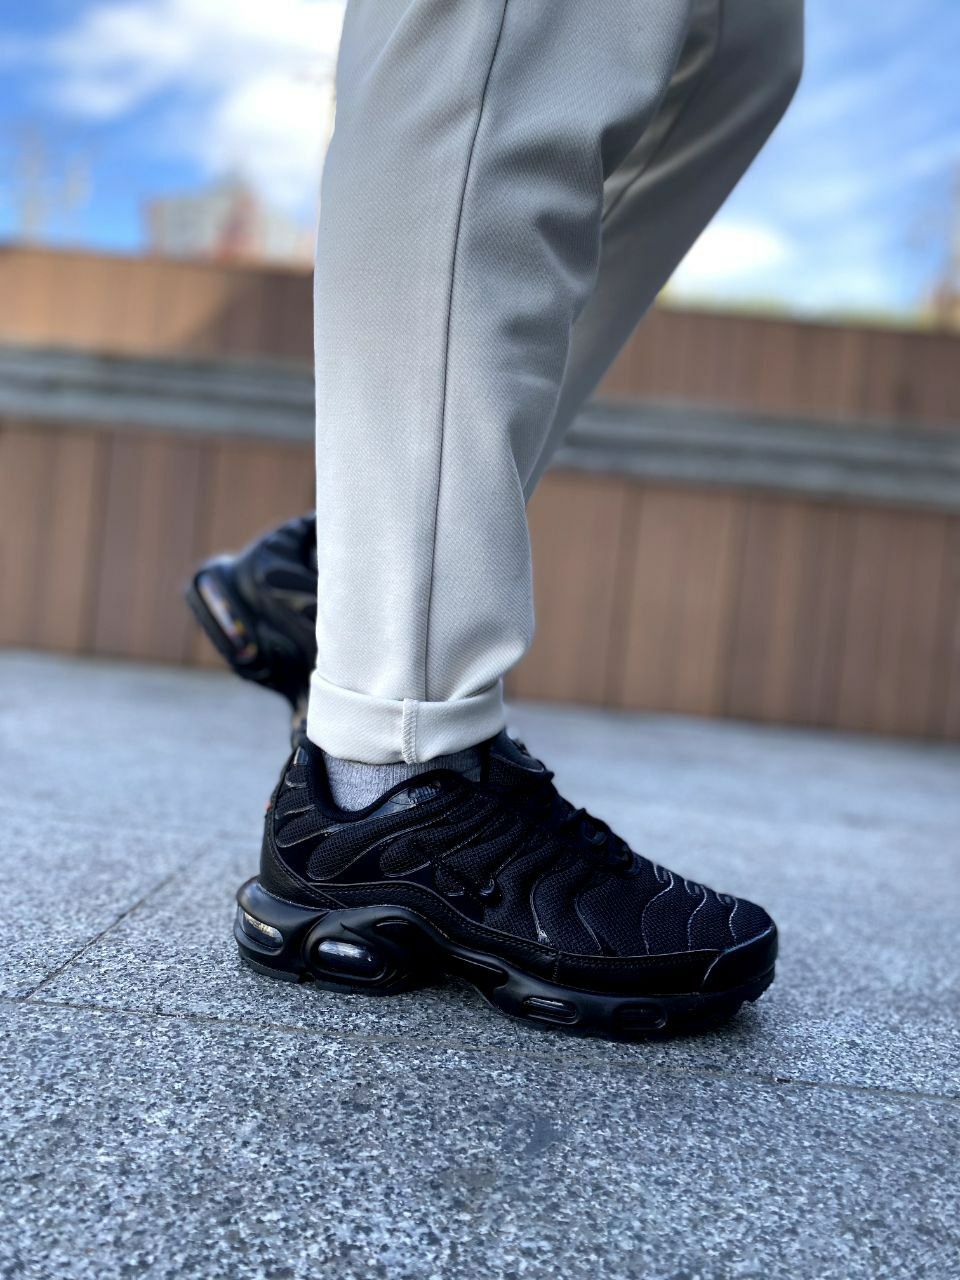 Nike air max plus tn black/мужские кросовки/чоловічі кросівки/nike